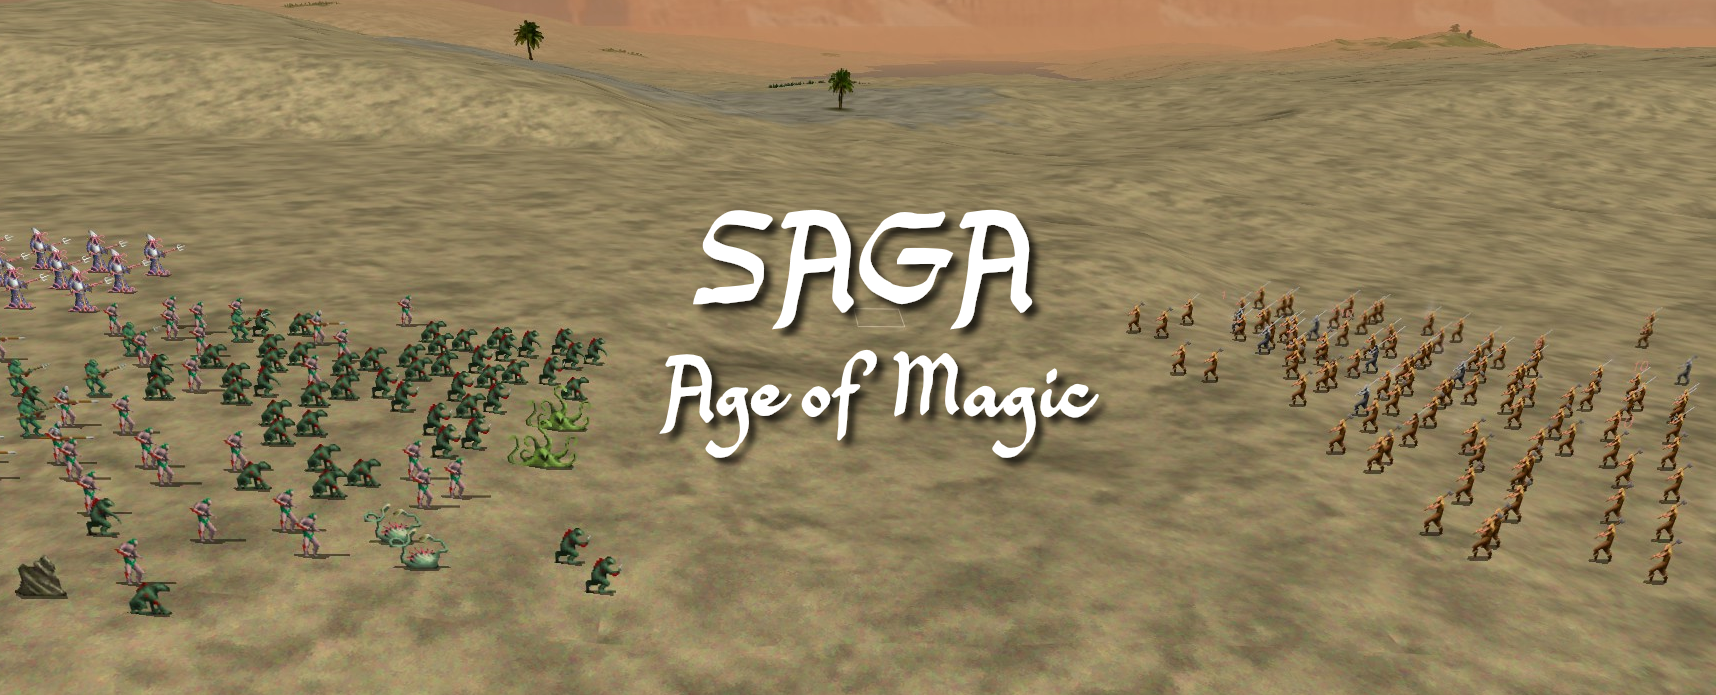 SAGA: Age of Magic written on a Dominions 5 screenshot